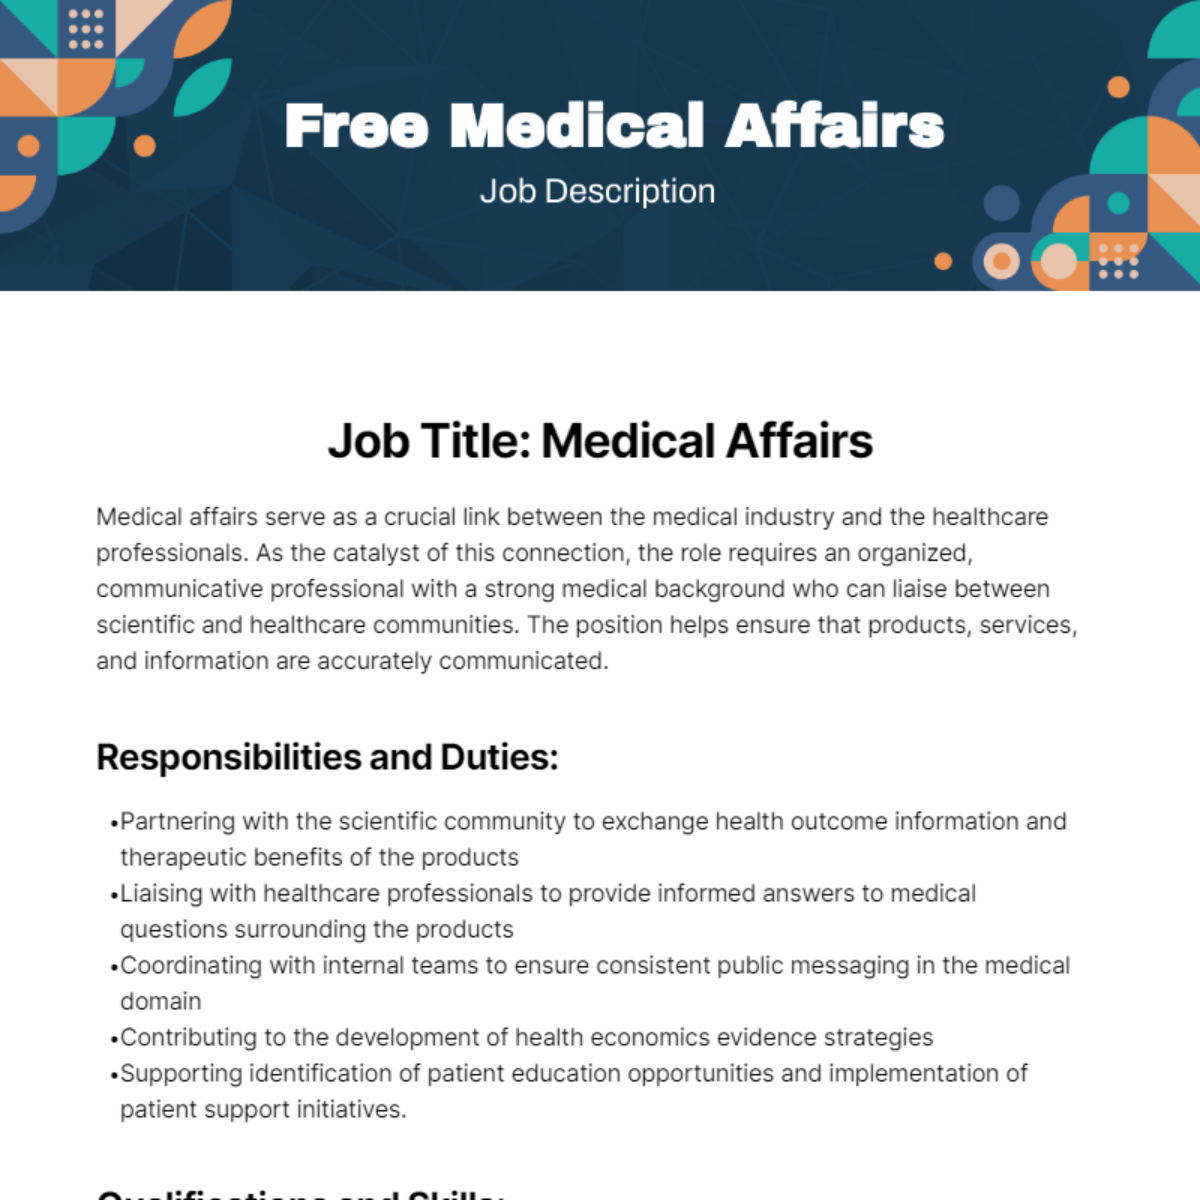 Free Medical Affairs Job Description Template